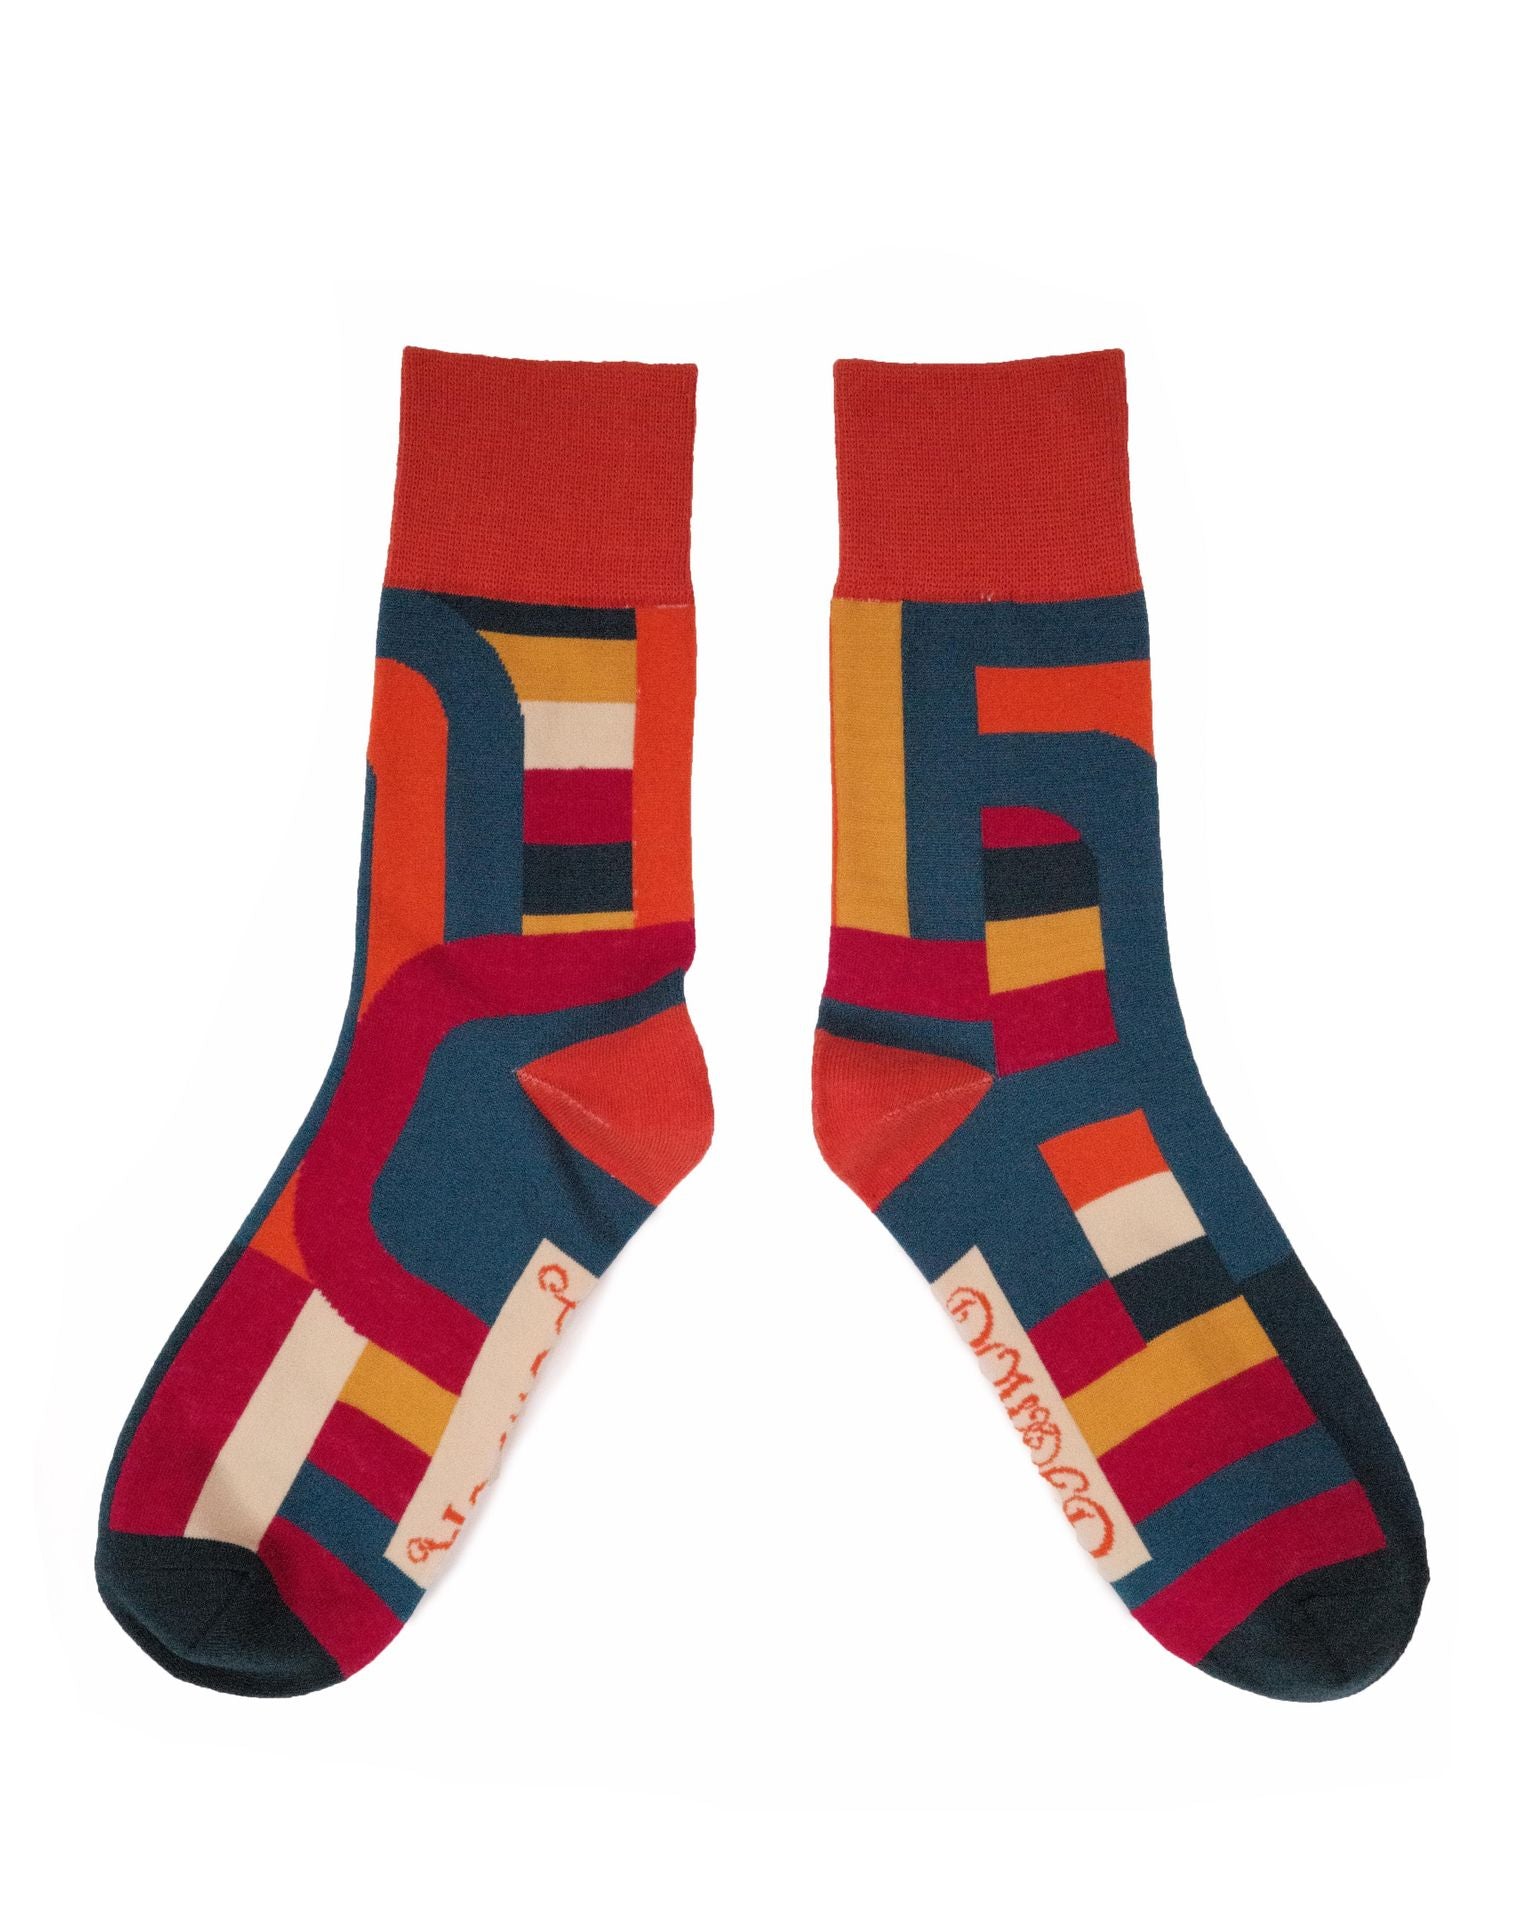 Powder Design - Mens Socks - Curved Stripes